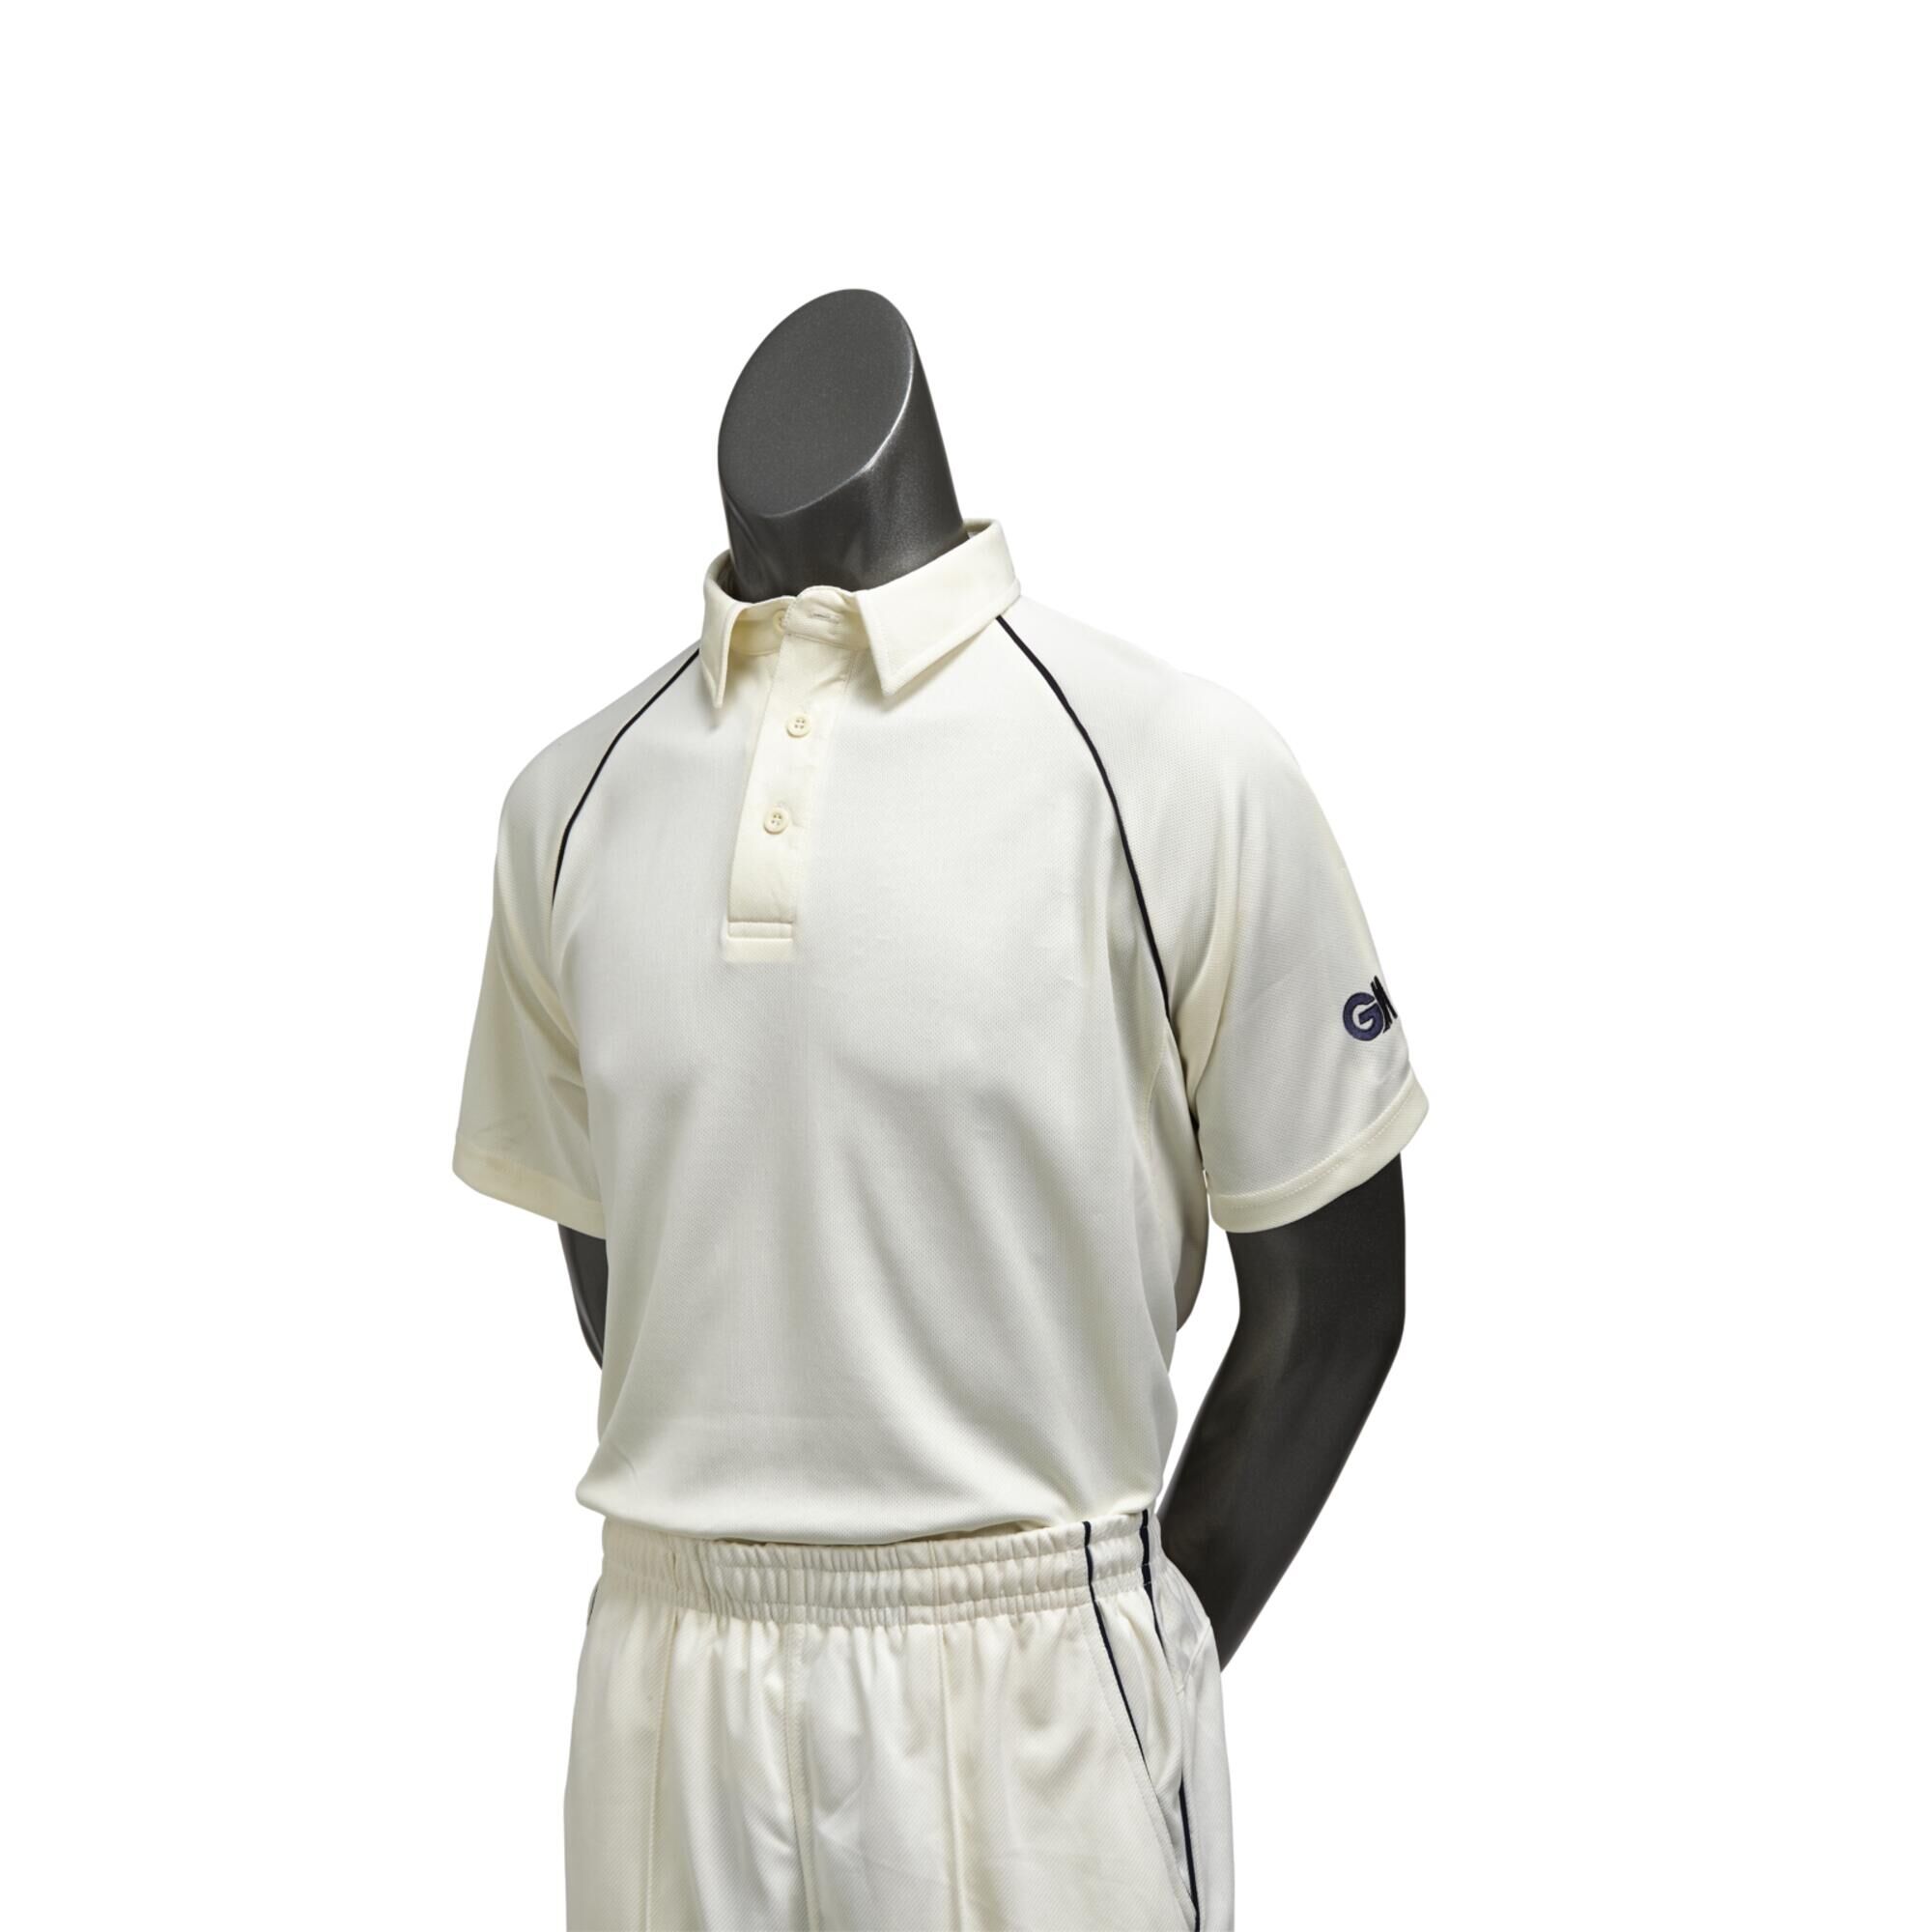 GUNN AND MOORE GM Premier Cricket Short Sleeve Shirt Adult